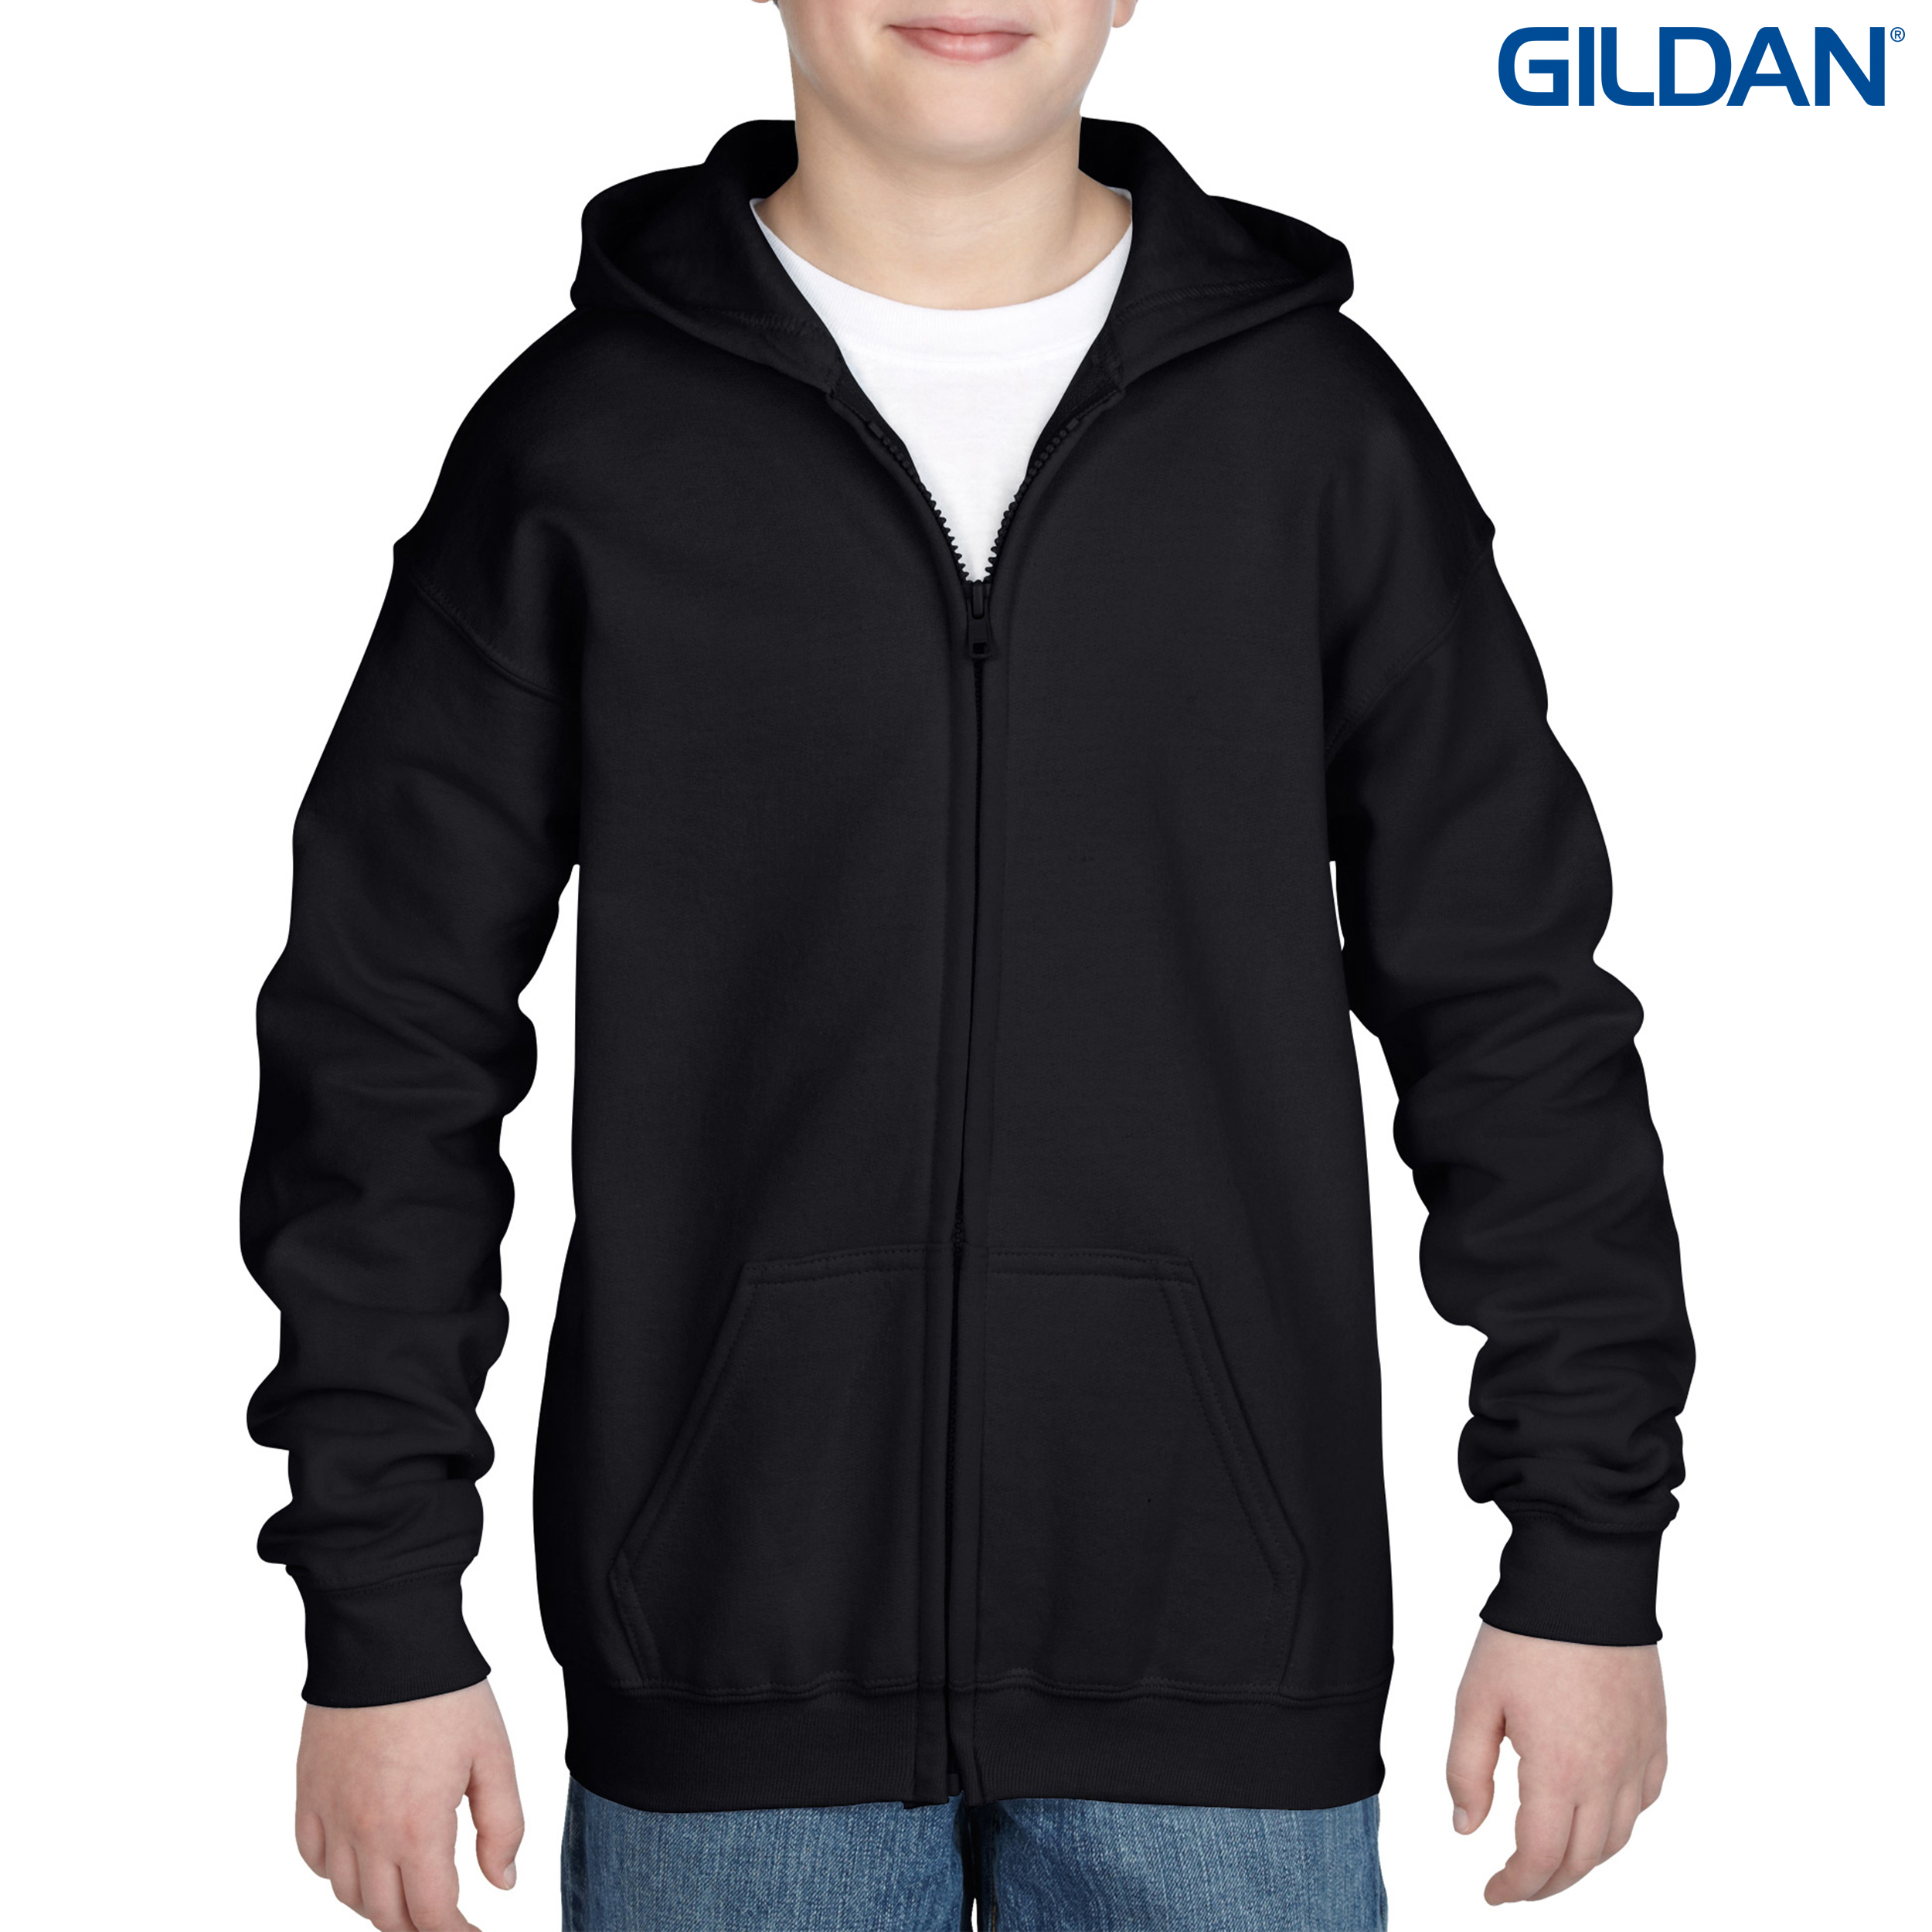 Premium Apparel 18600B Gildan Youth Zip Hoody